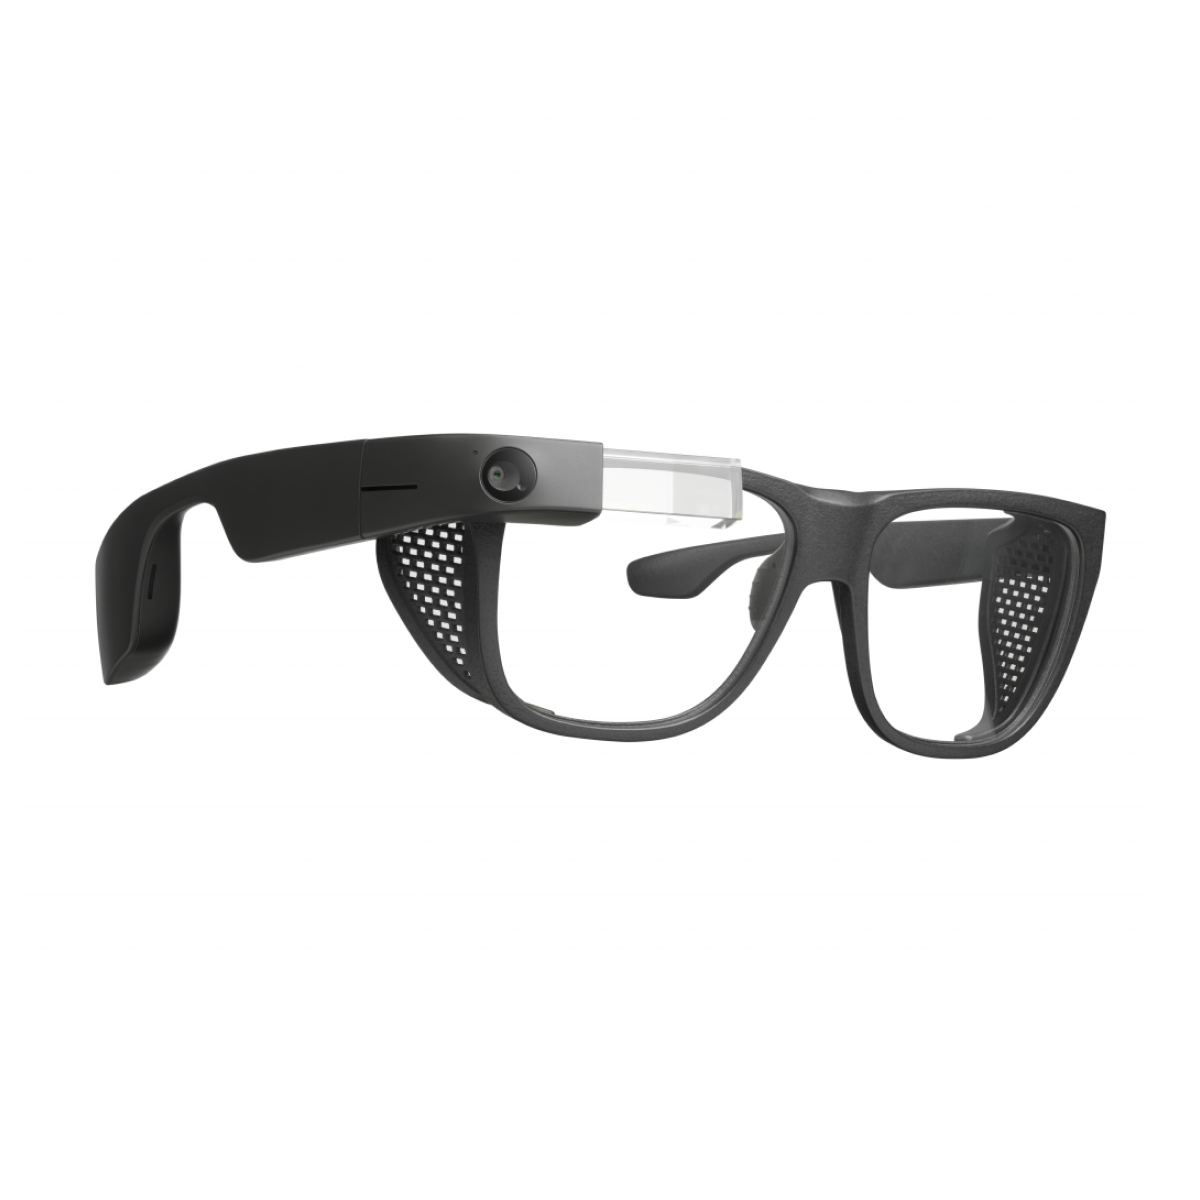 Envision Glasses: Home Edition - AI-powered smartglasses – Envision Store